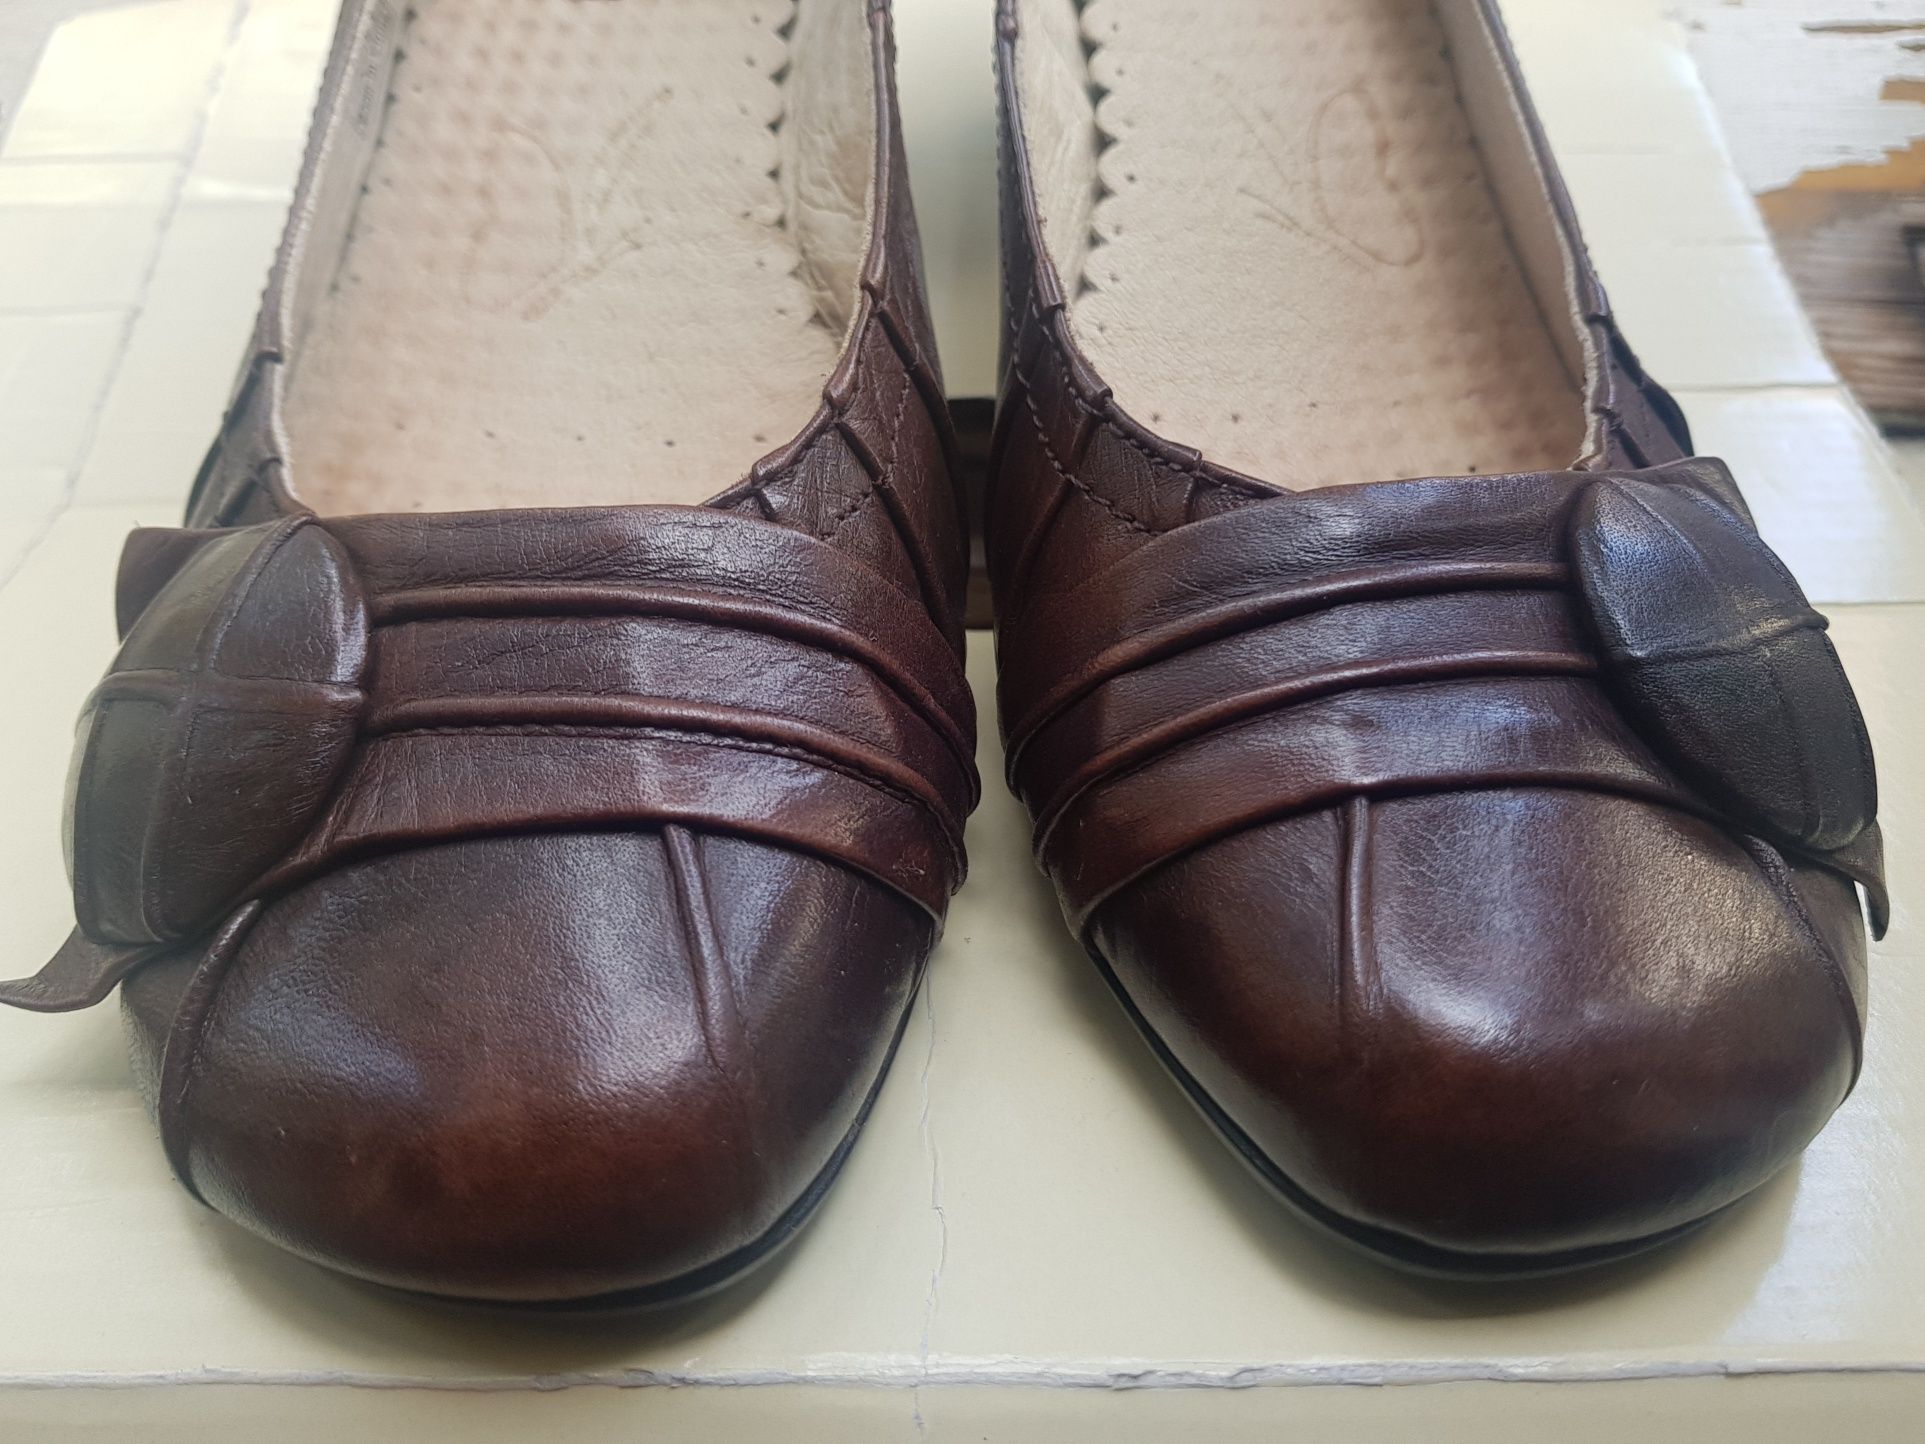 Pantofi Caprice nr. 38, piele naturală interior/exterior, impecabili